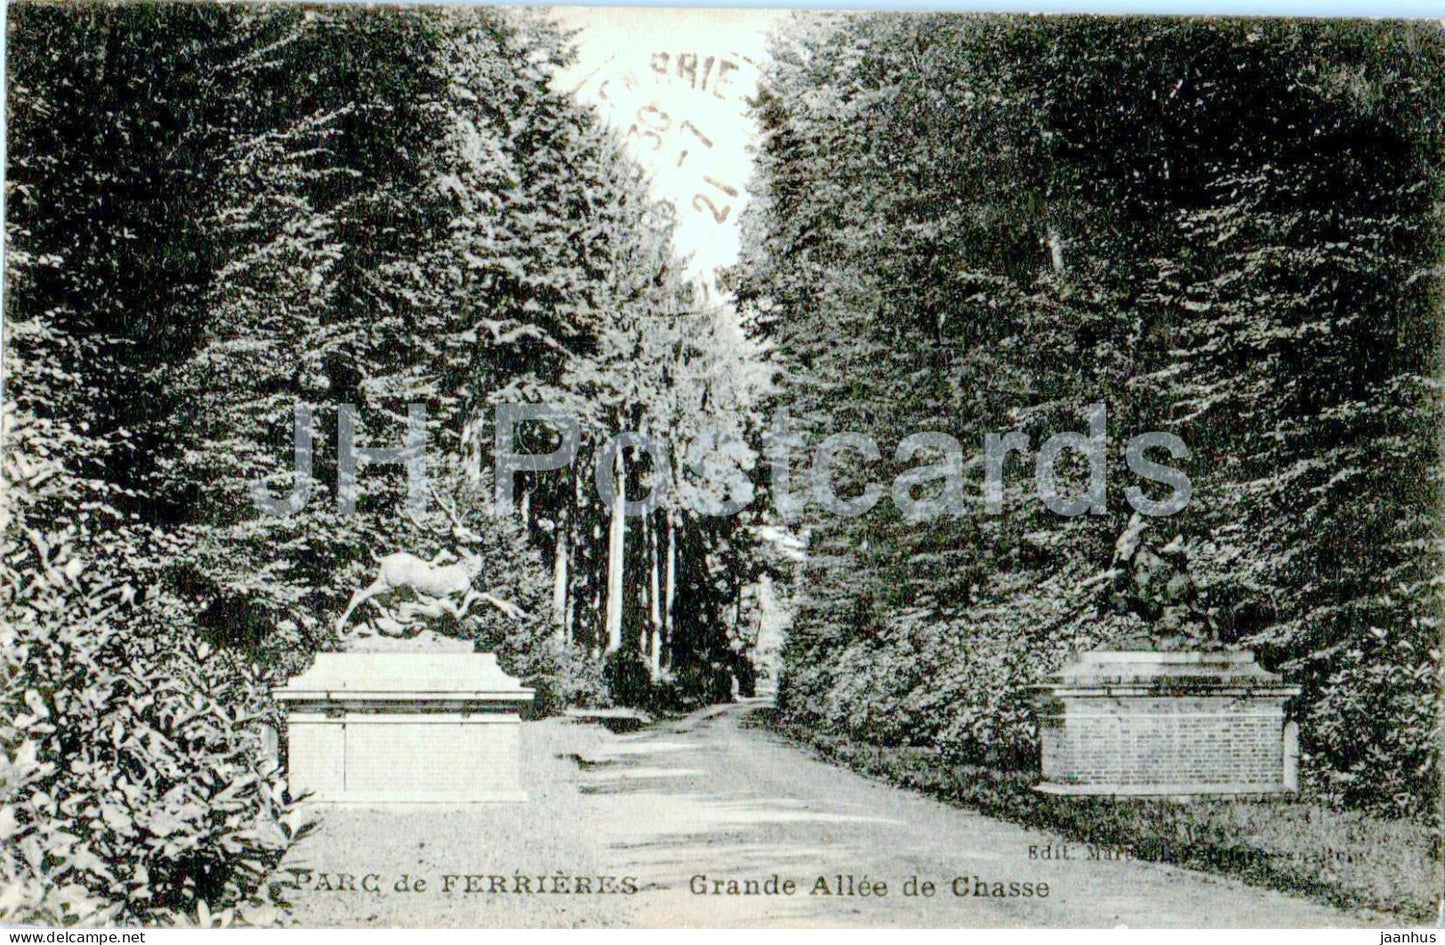 Parc de Ferrieres - Grande Allee de Chasse - old postcard - France - used - JH Postcards